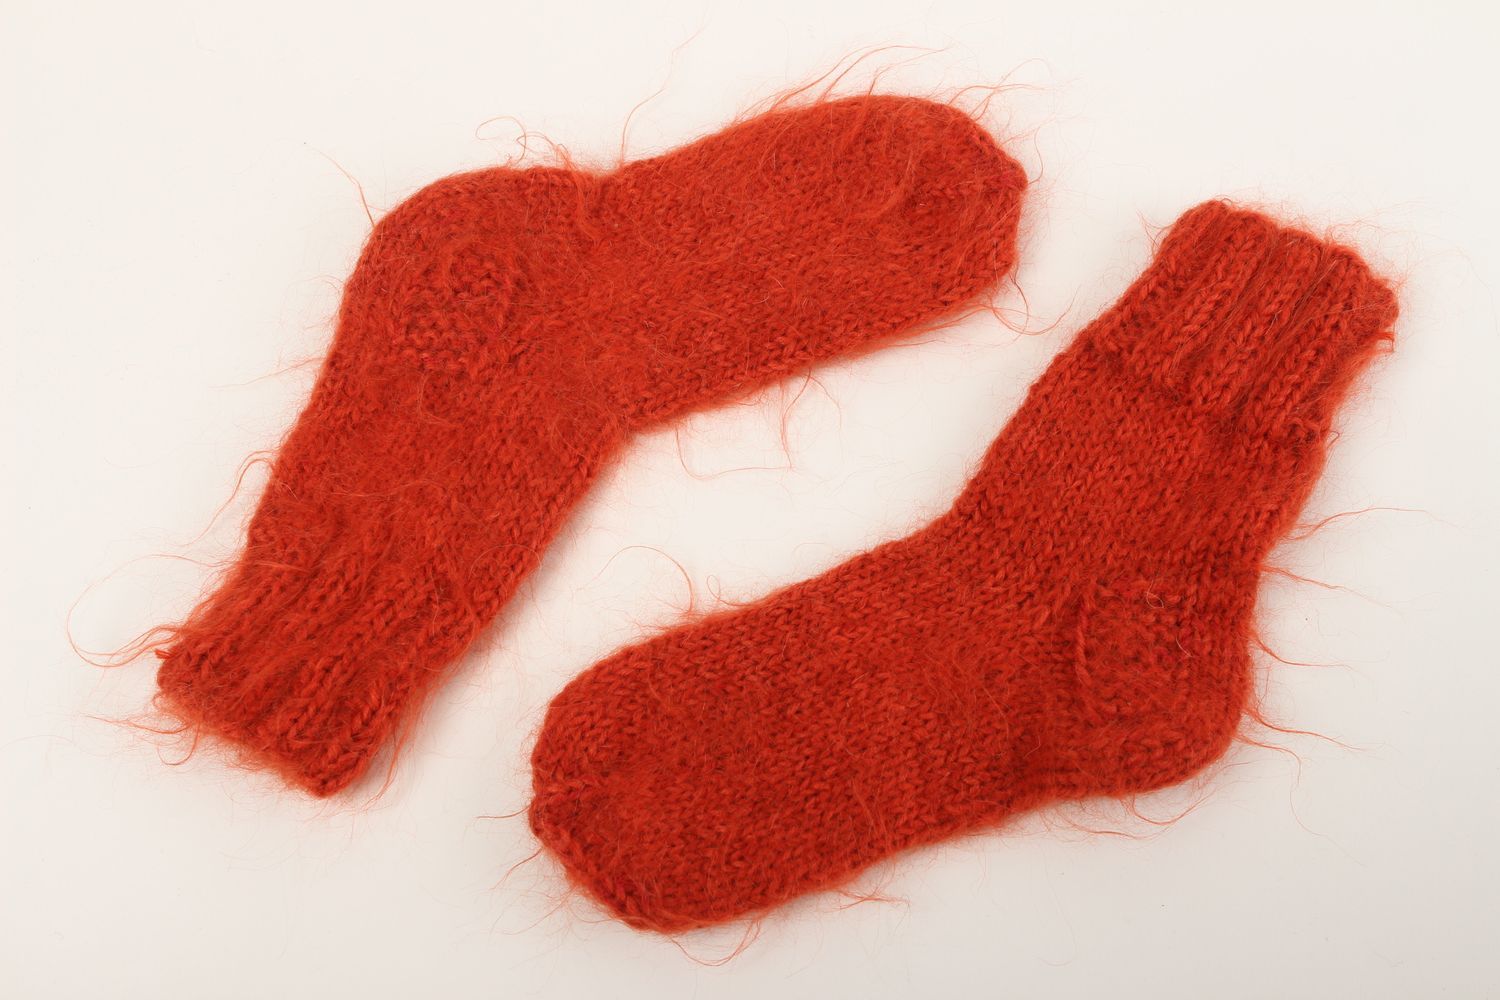 Homemade knitted socks best woolen socks winter clothing heat socks cool gifts photo 2